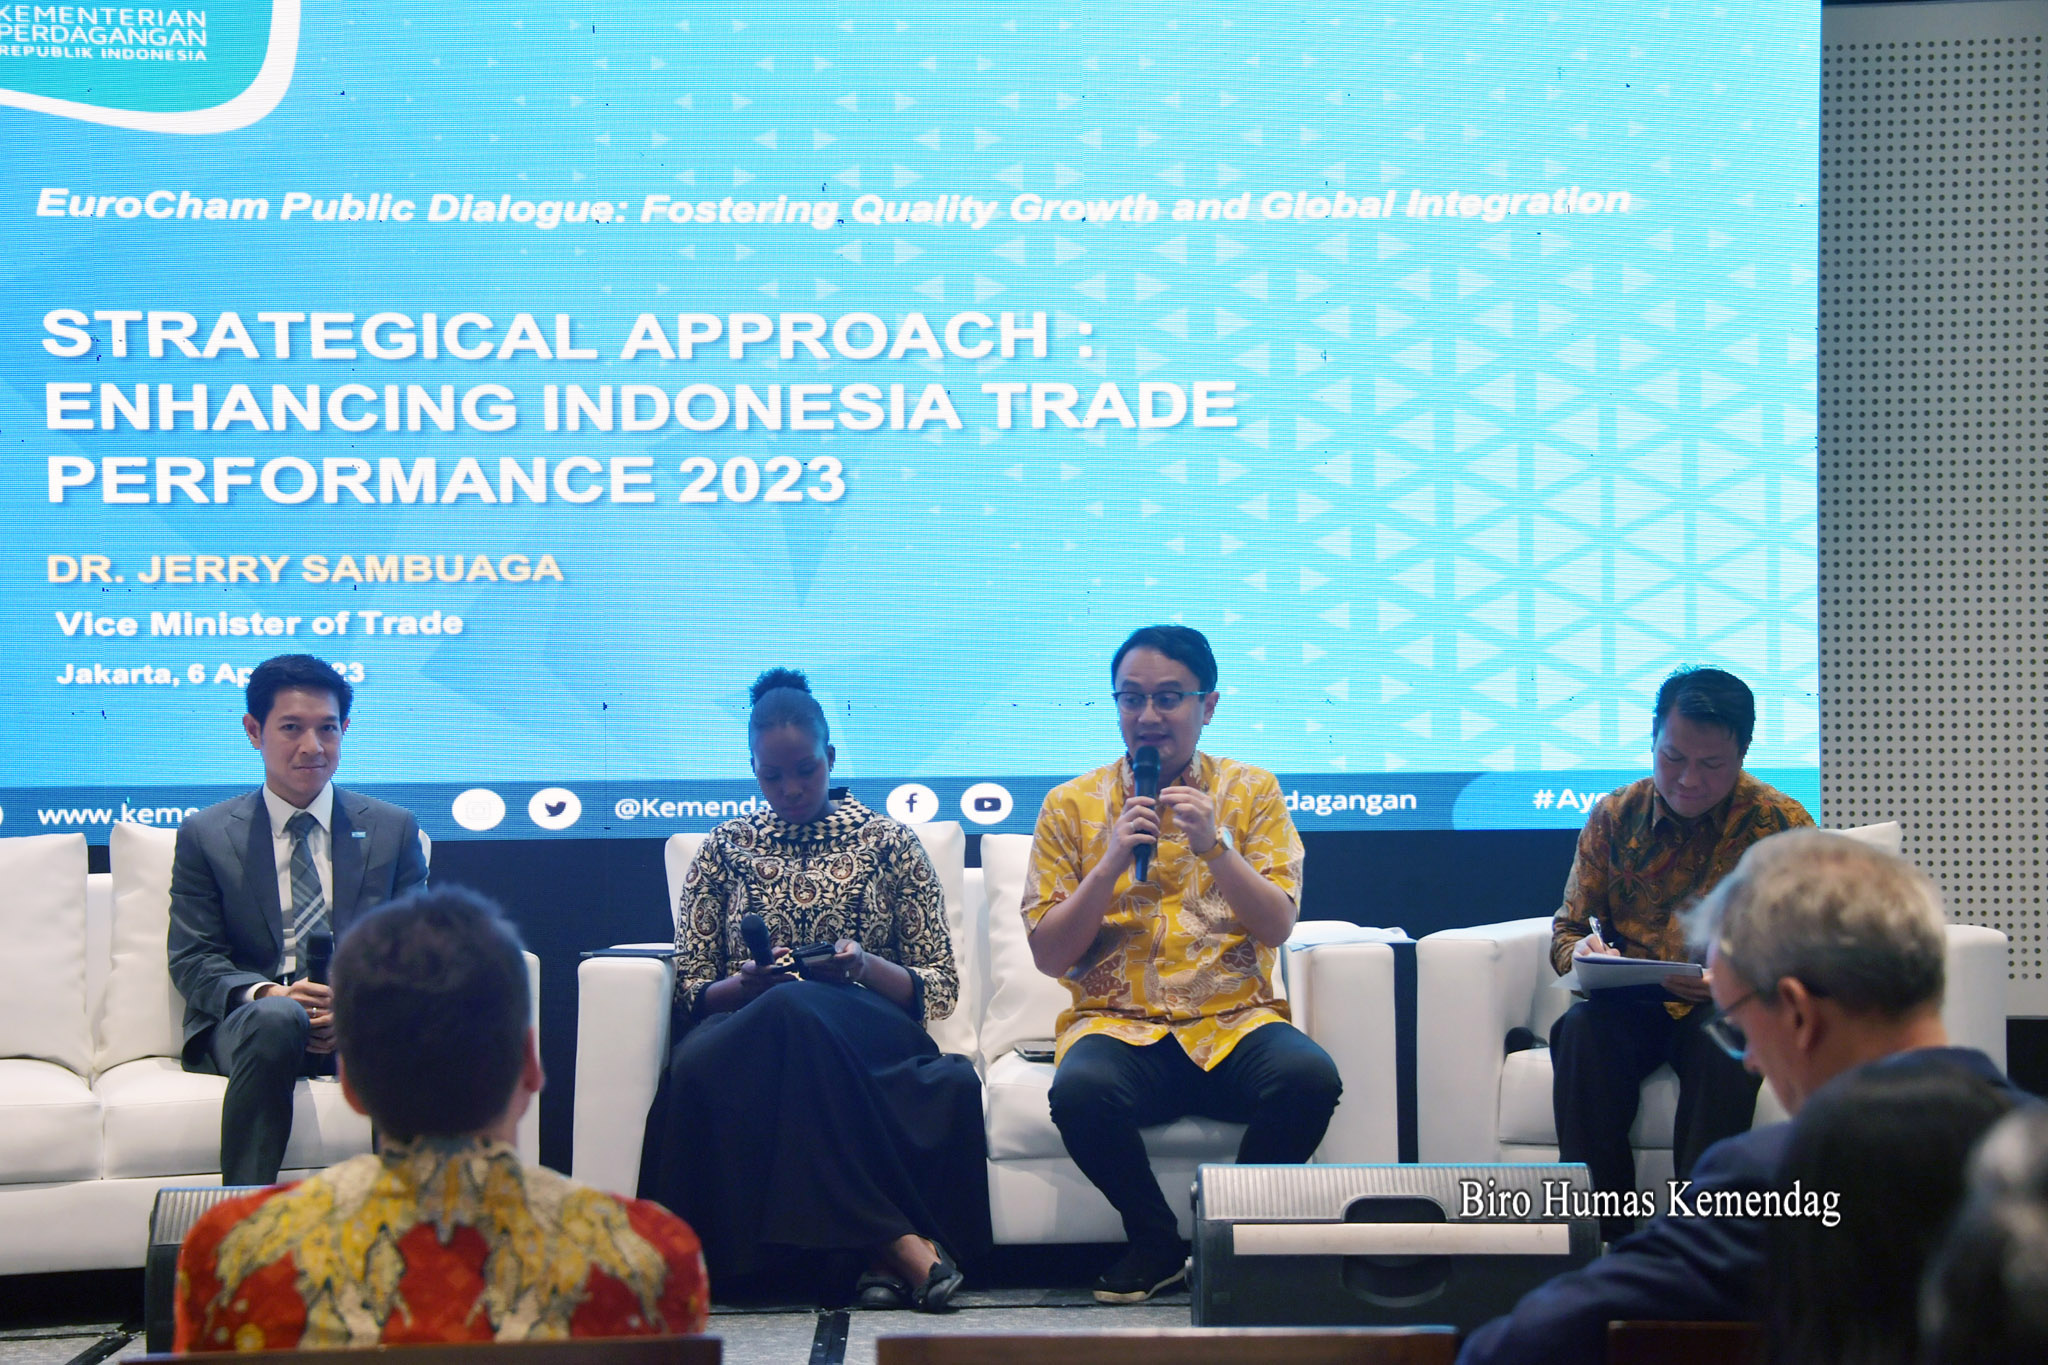 Wakil Menteri Perdagangan, Jerry Sambuaga menjadi panelis pada Dialog Publik EuroCham Indonesia dengan tema “Fostering Quality Growth and Global Integration” yang berlangsung di World Trade Center, Jakarta, Kamis (6 Apr).